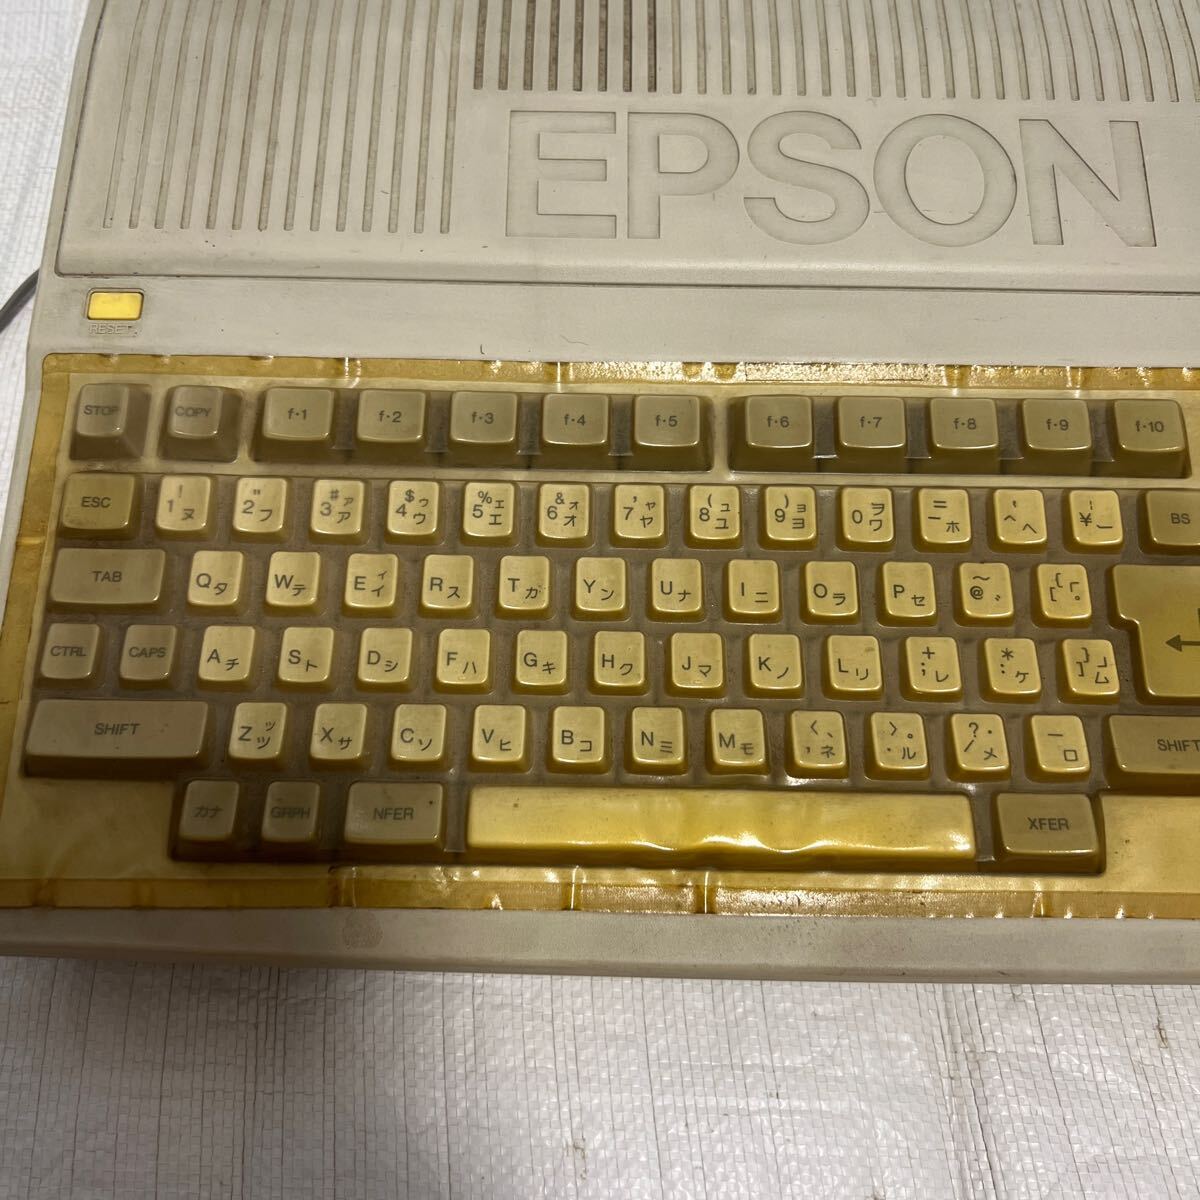 EPSON Epson PC-286C personal computer PC-286CSTD PC CLUB present condition goods 